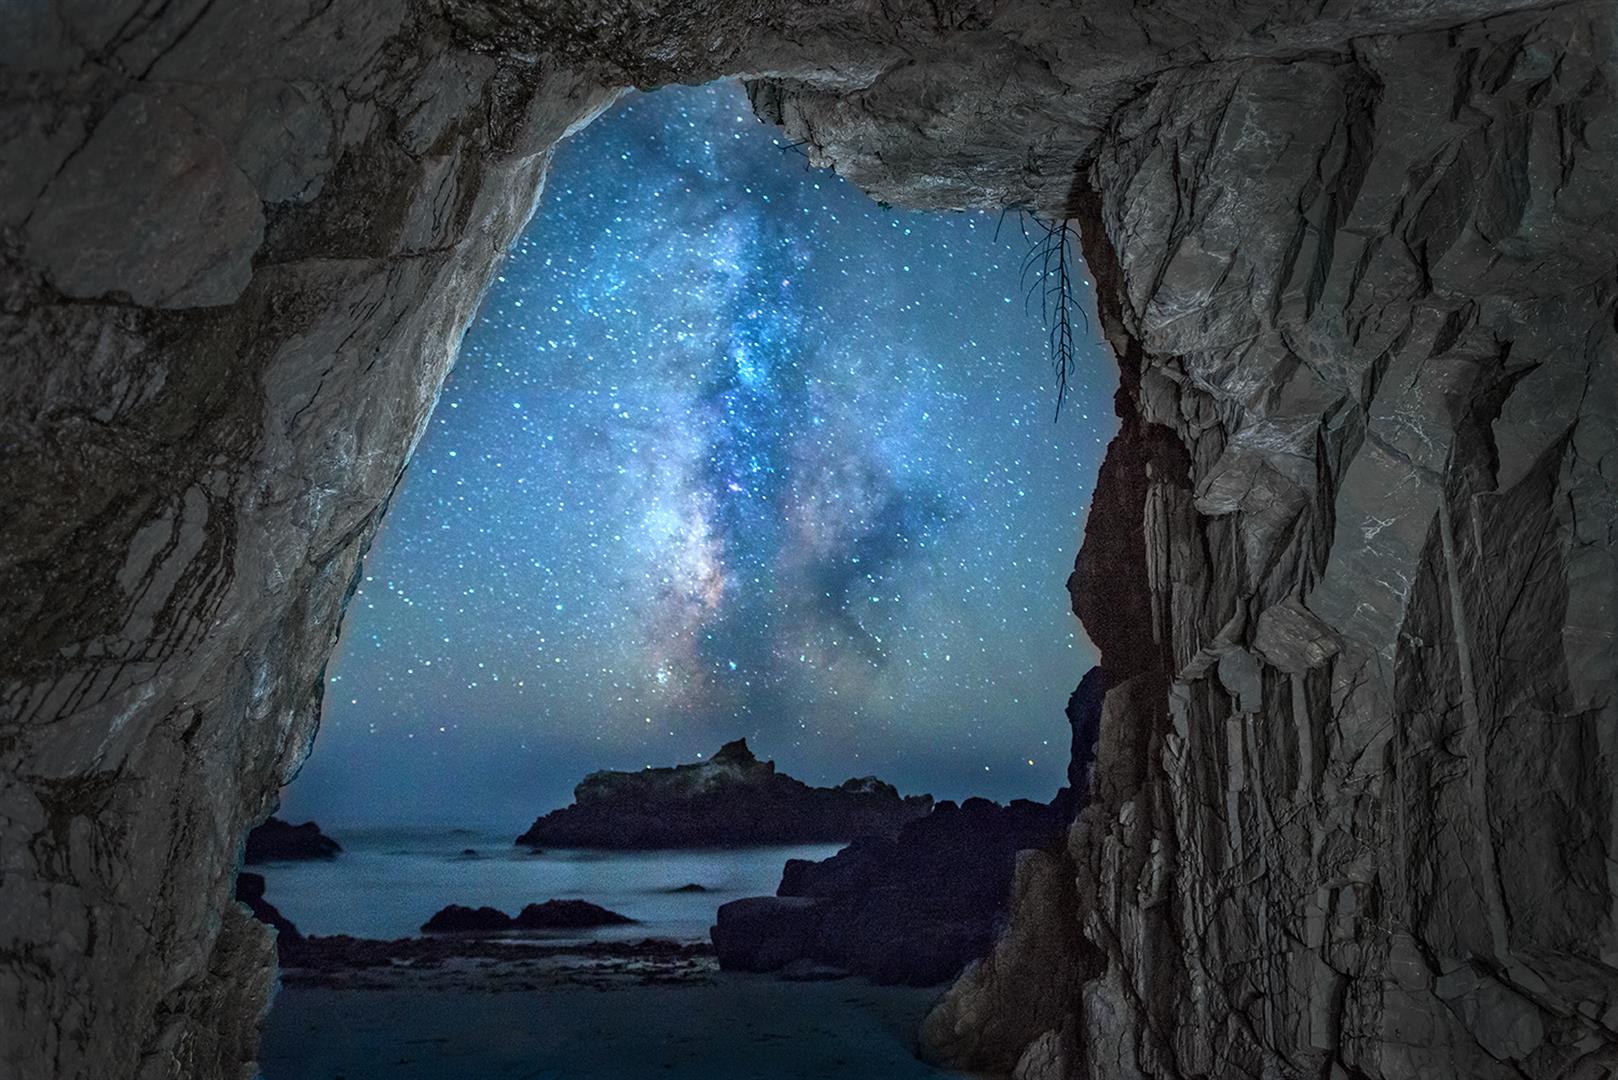 Supermoon Lunar Eclipse, Sea Ranch, Sea cave and the Milky Way, Paul Kozal